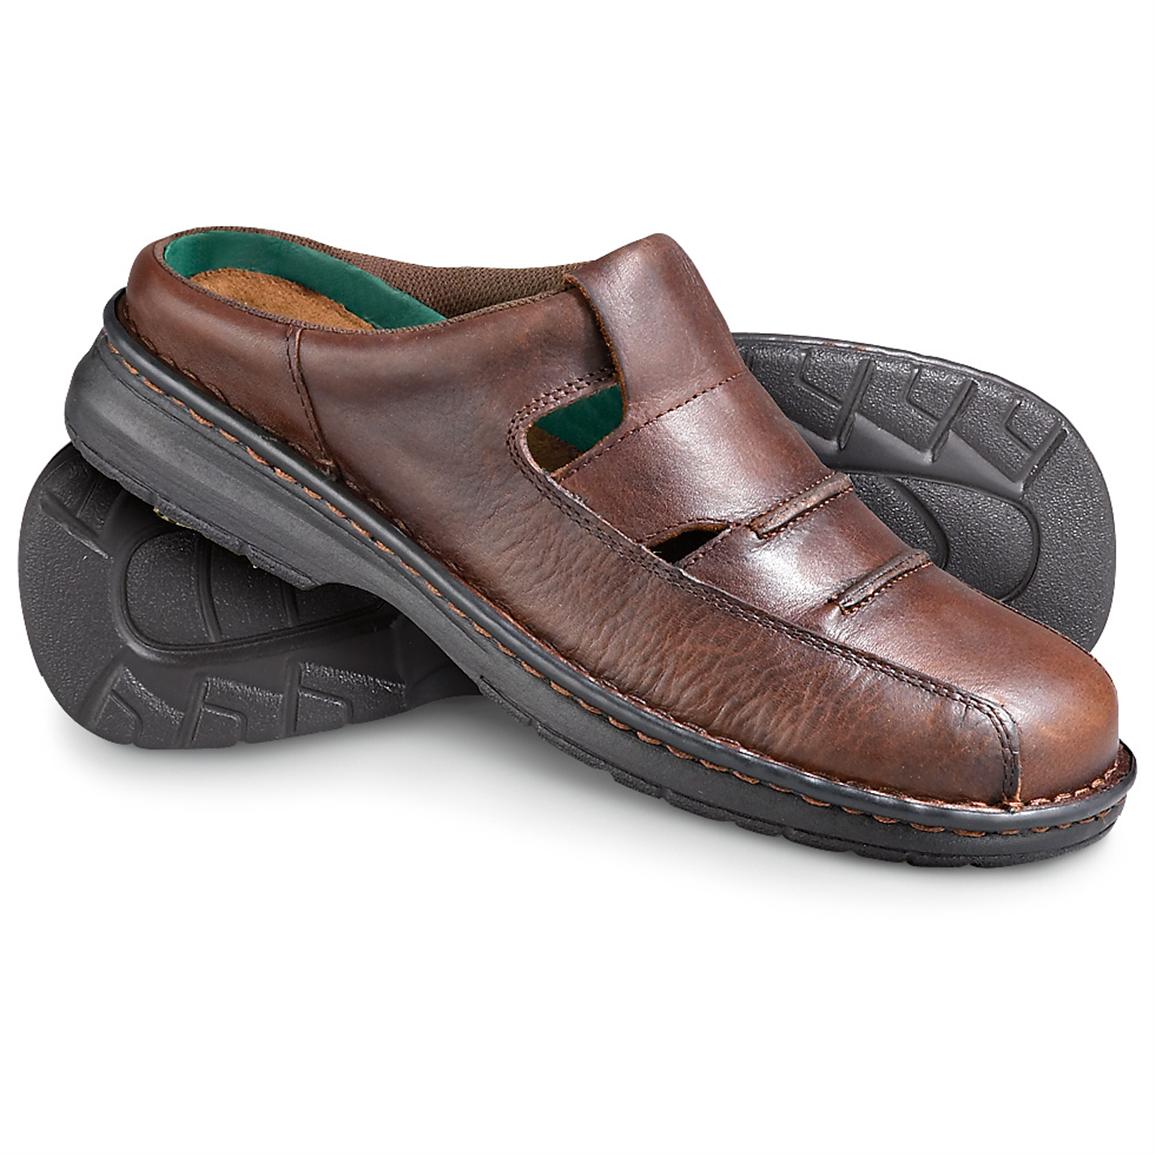 duck head shoes sandals